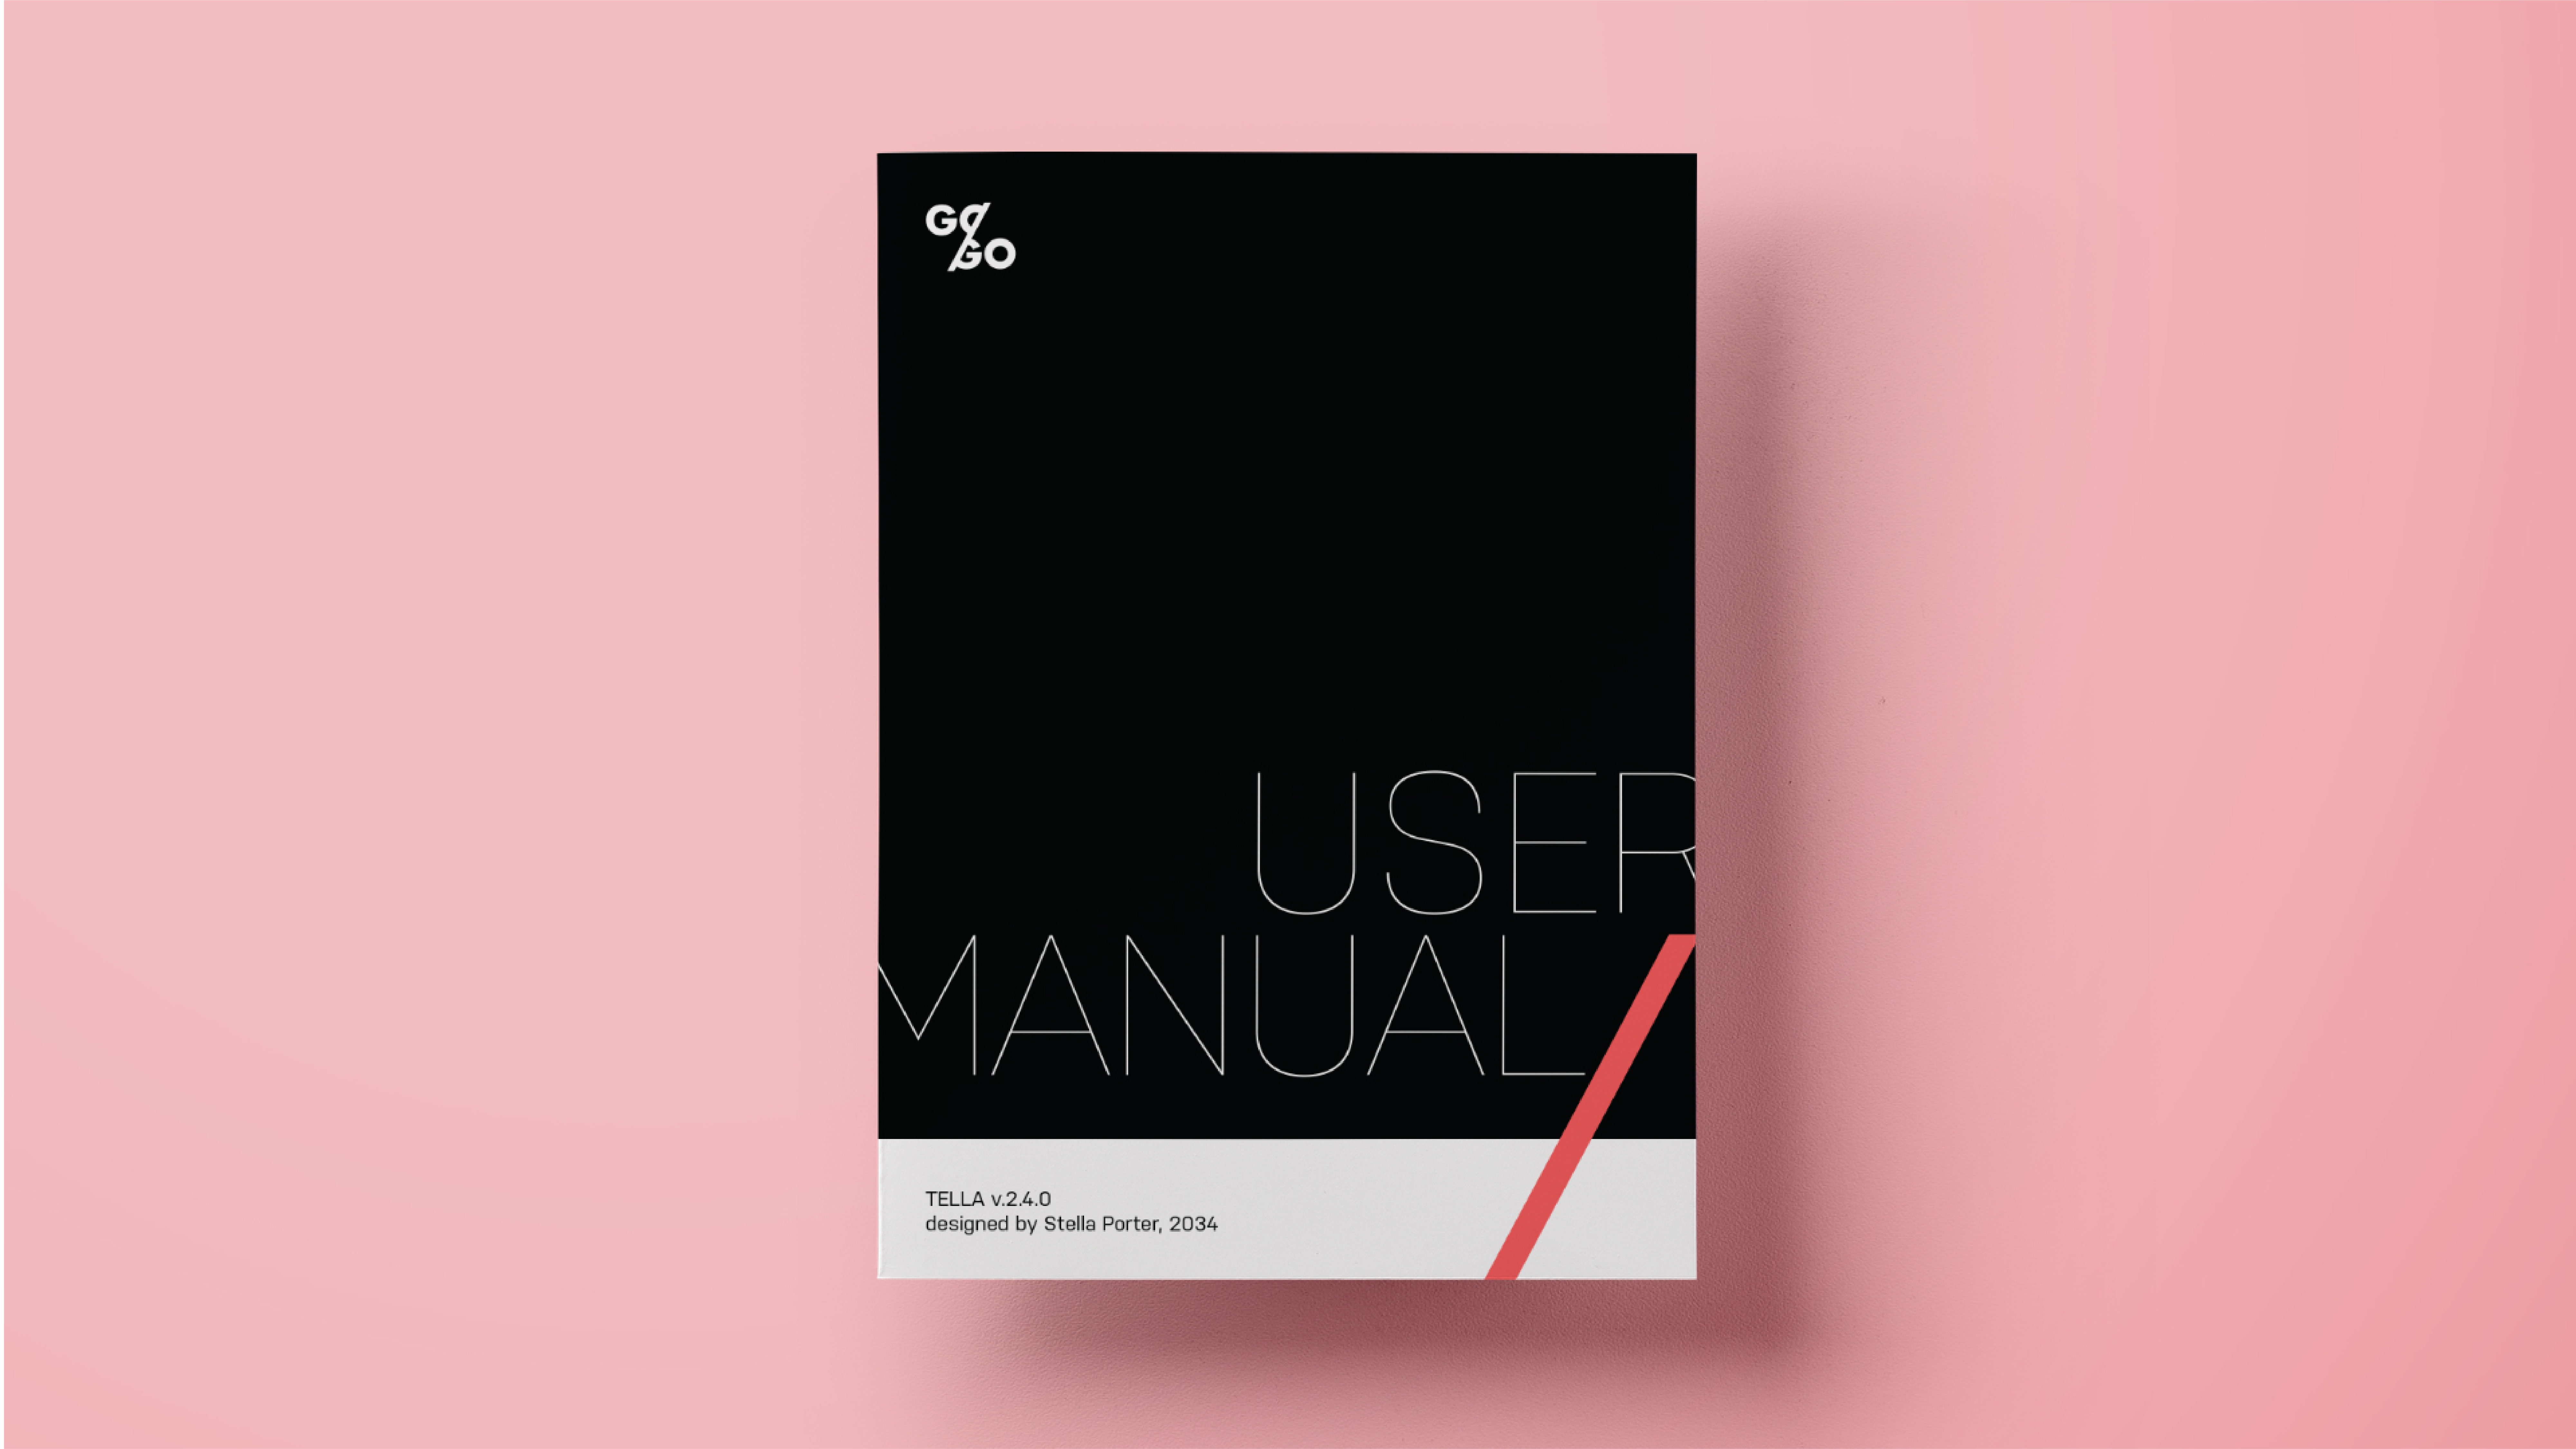 GoGo User Manual